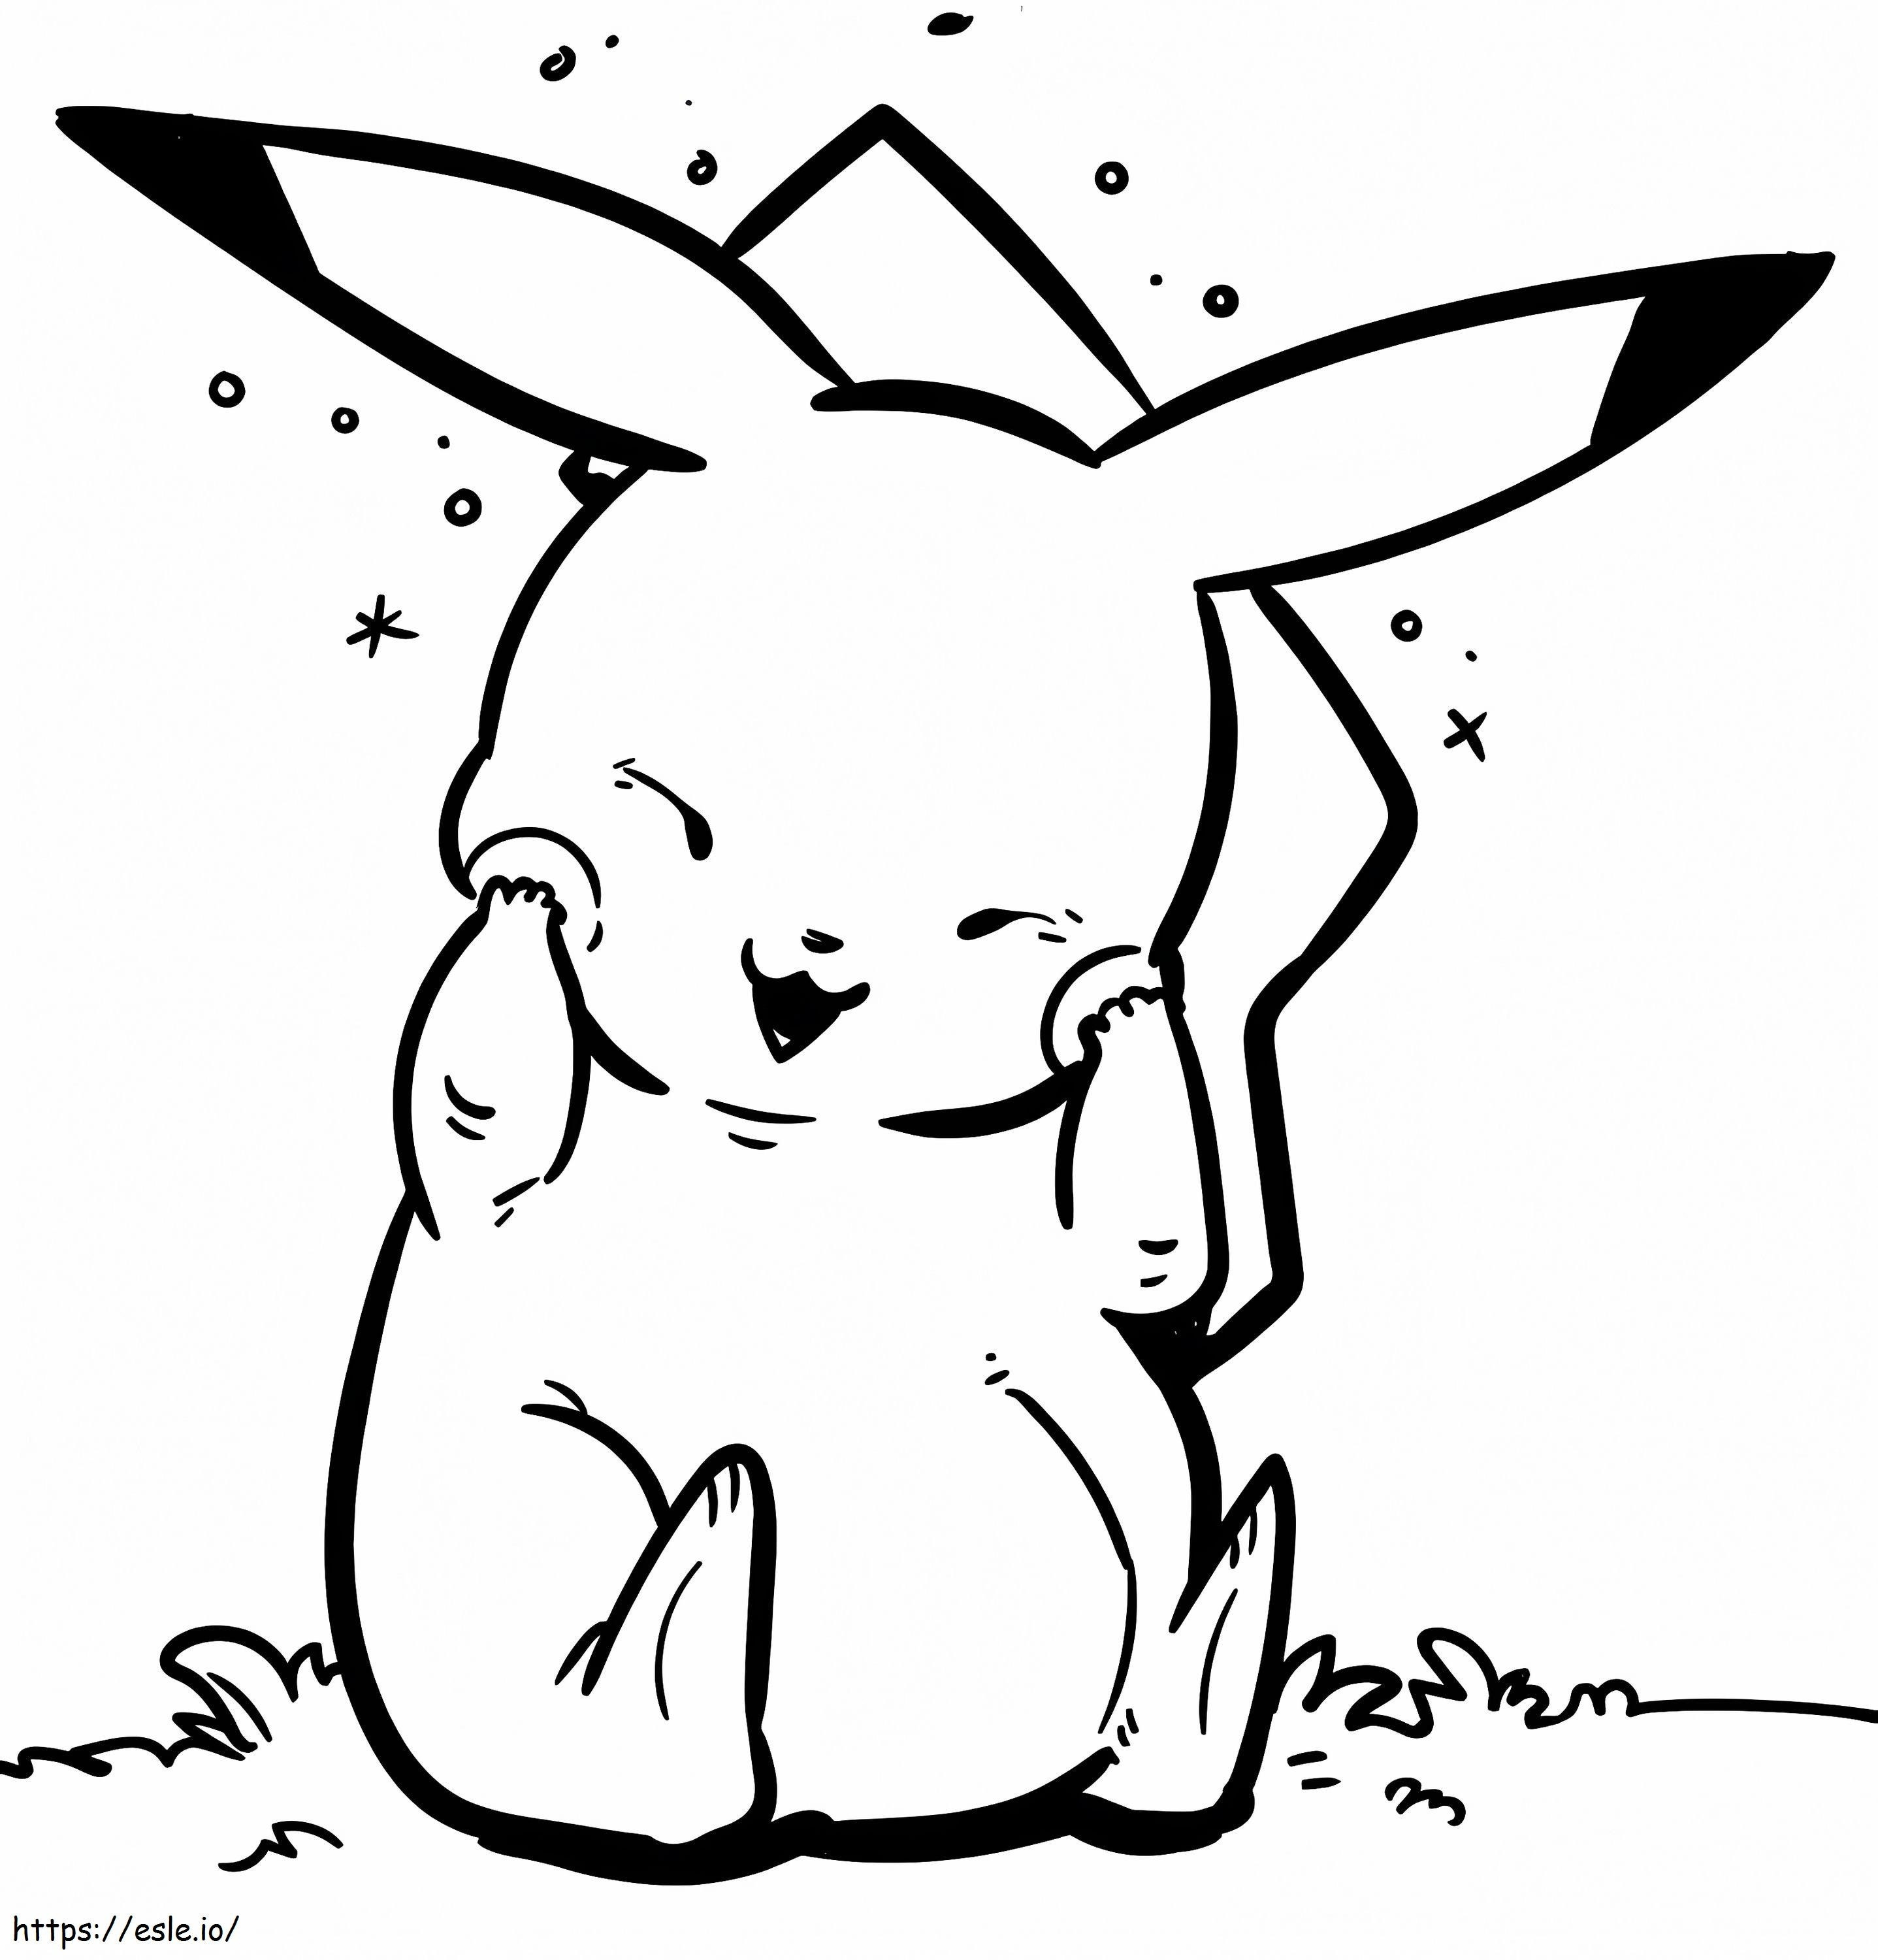 Shy Pikachu coloring page